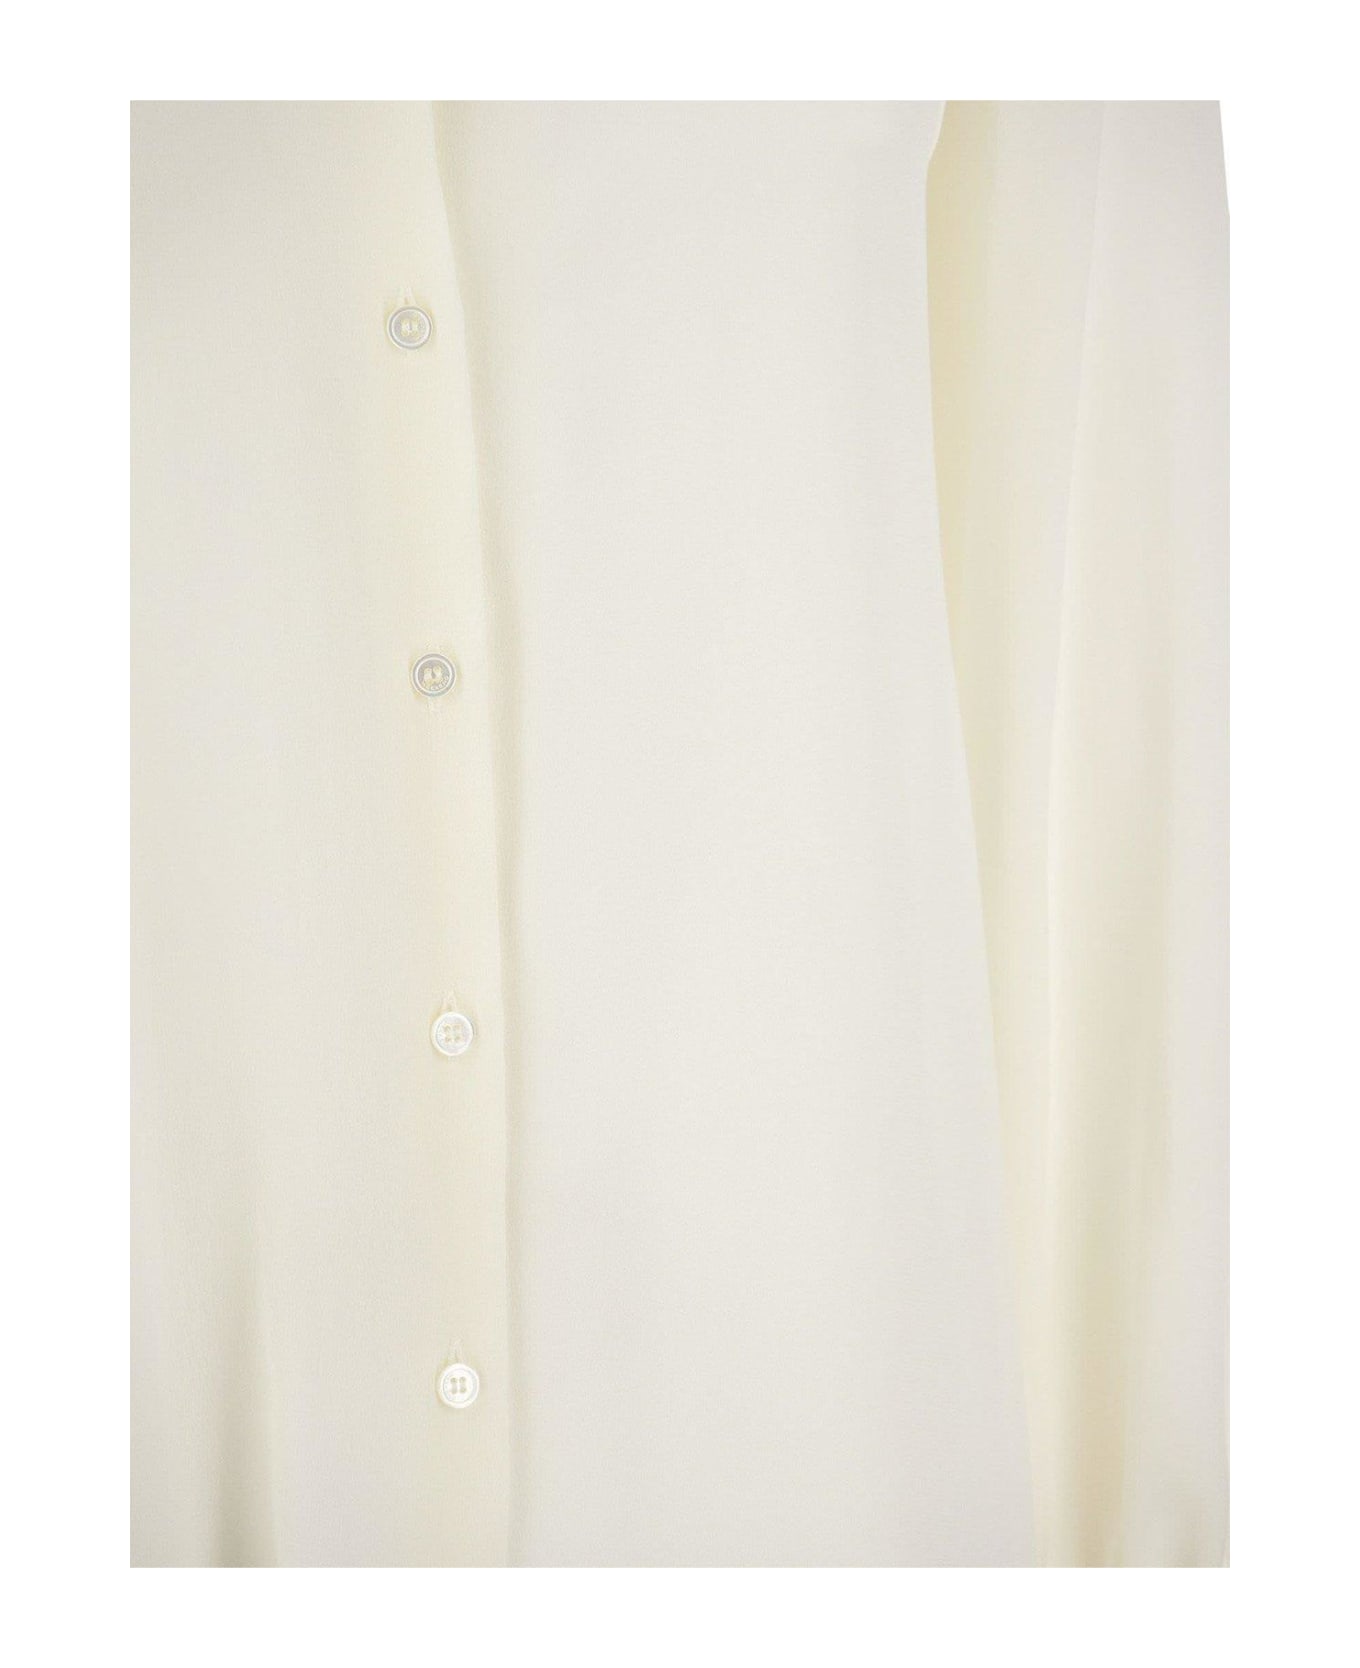 Weekend Max Mara Buttoned Long-sleeved Shirt - WHITE